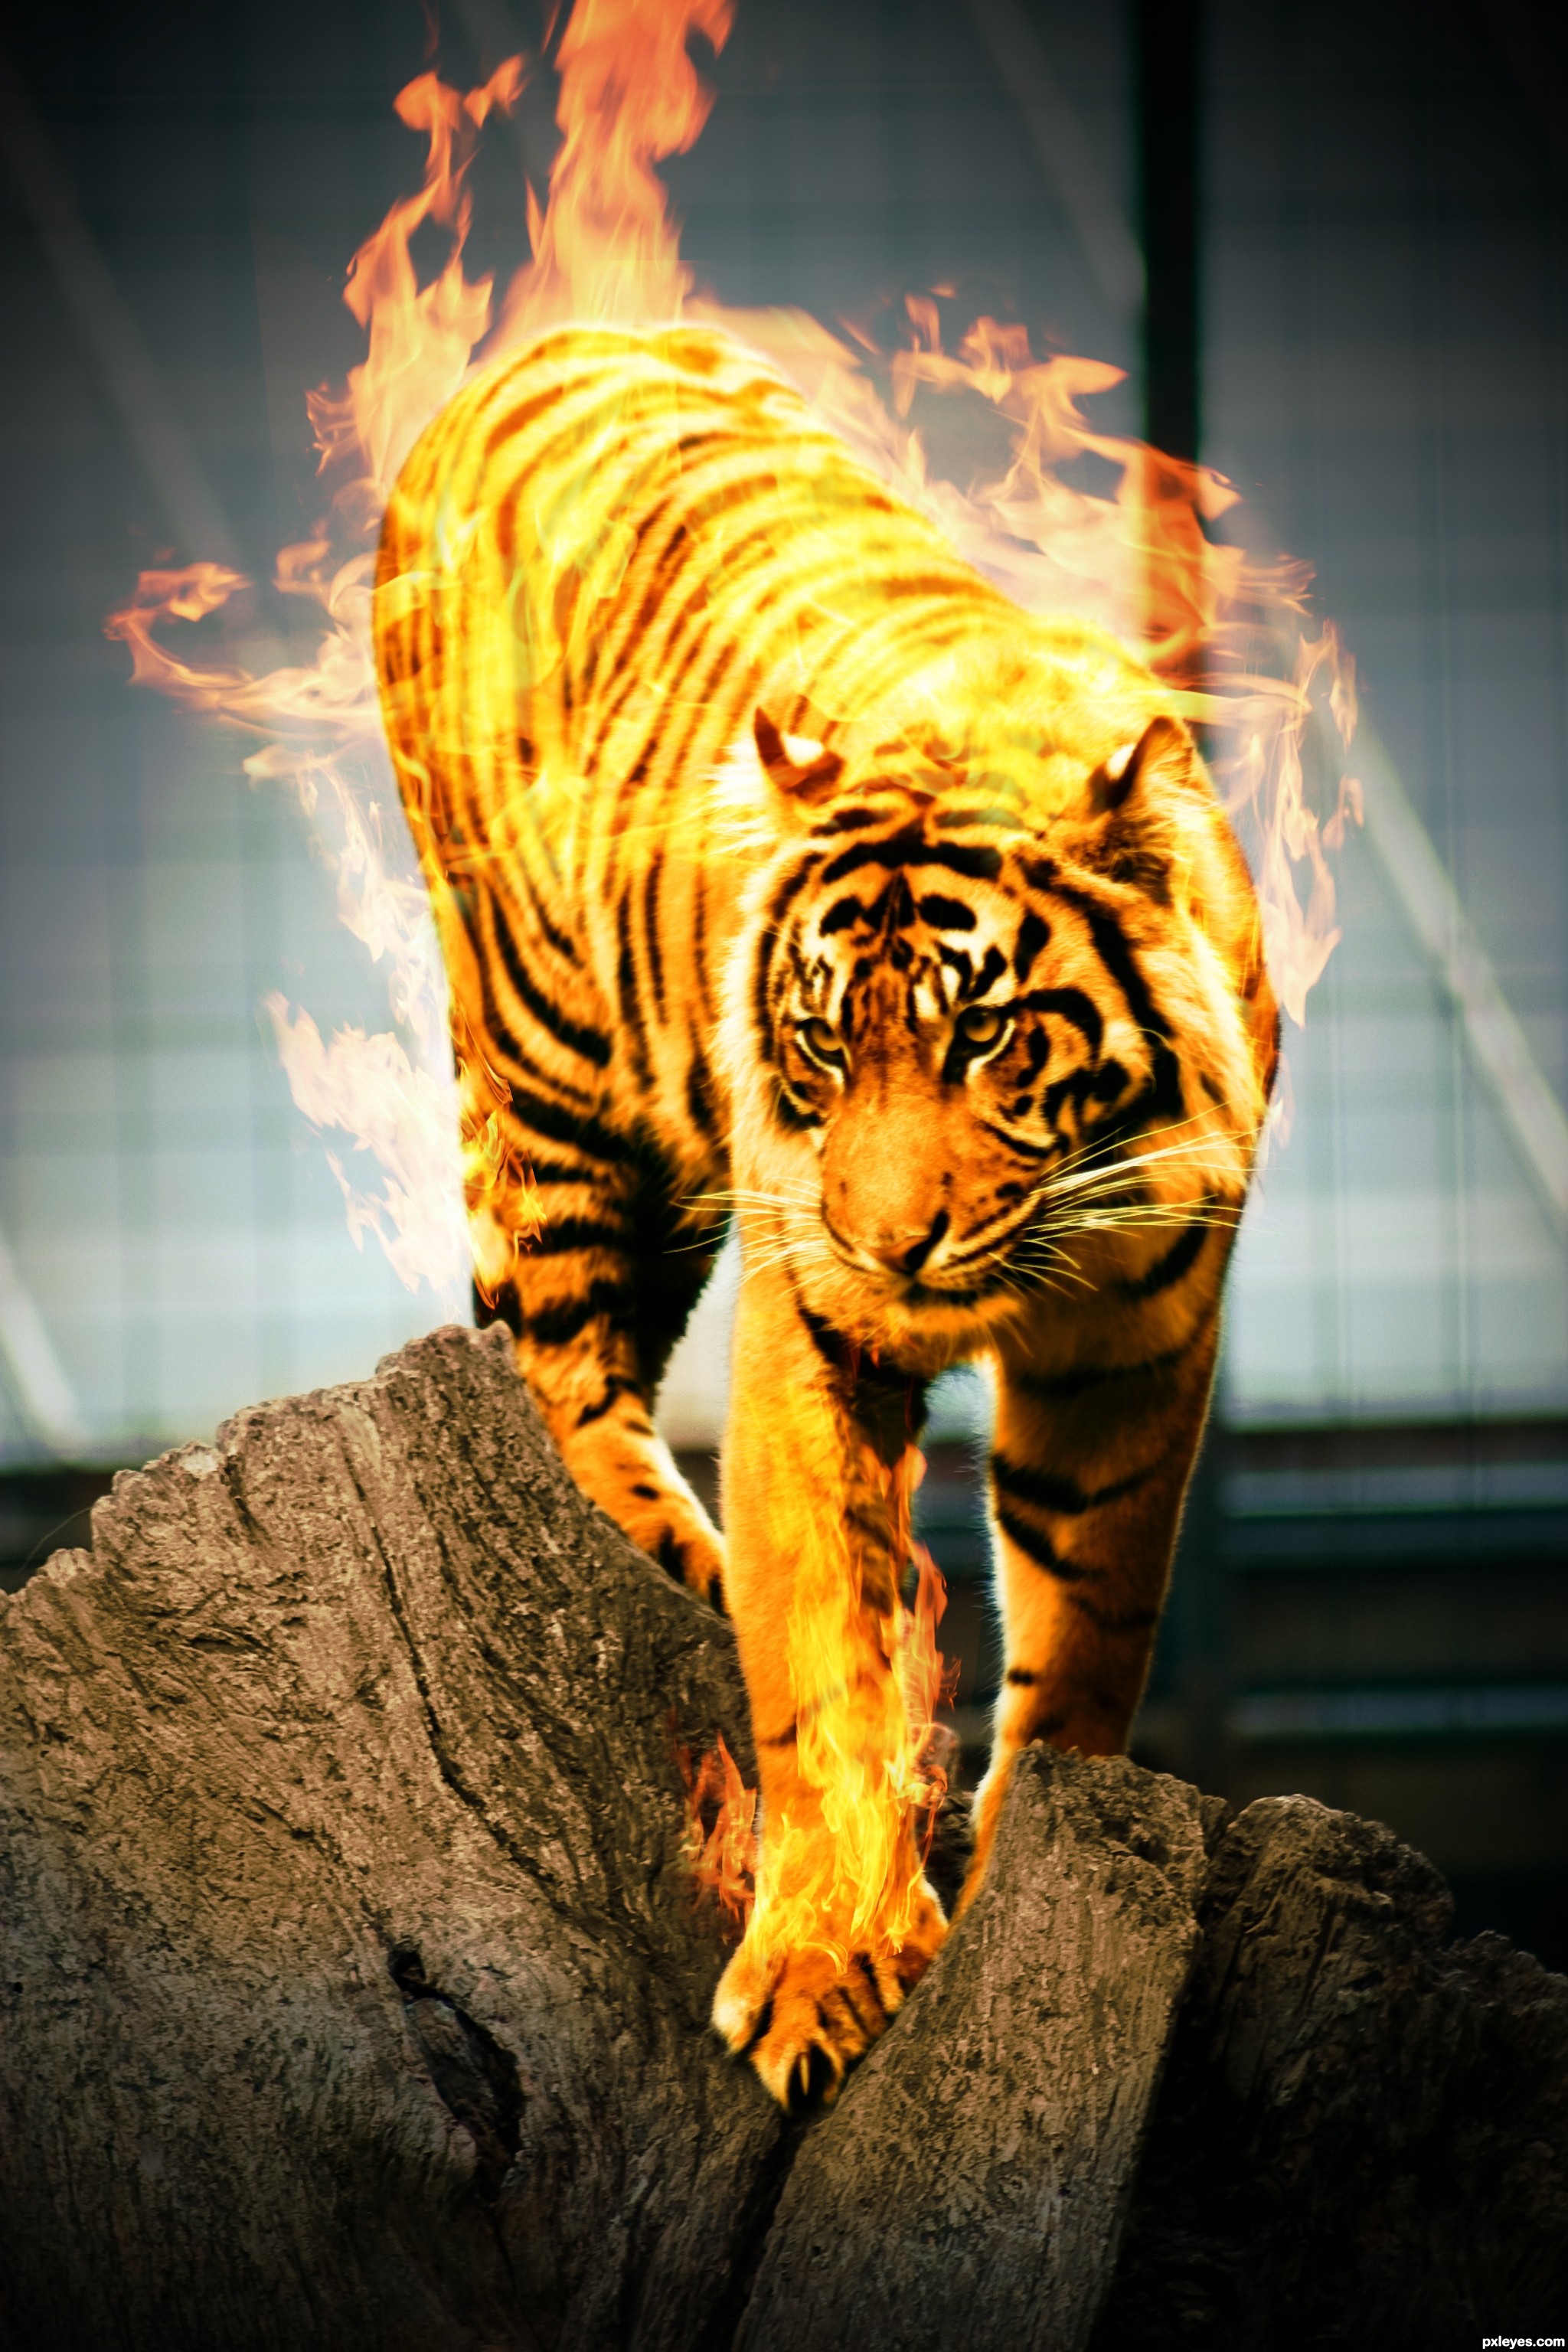 Flaming Tiger Wallpapers